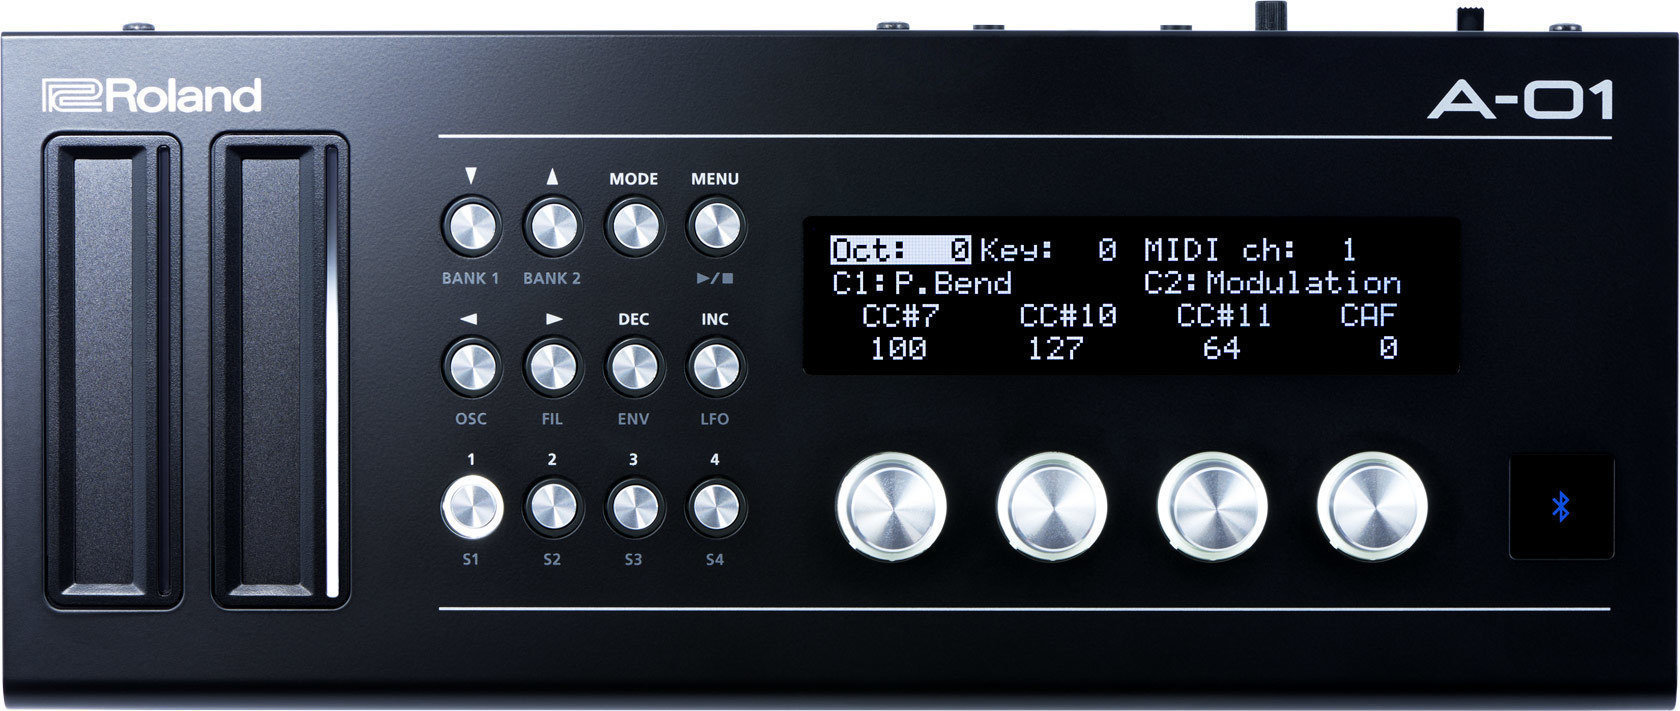 MIDI kontroler, MIDI ovladač Roland A-01 Roland Boutique